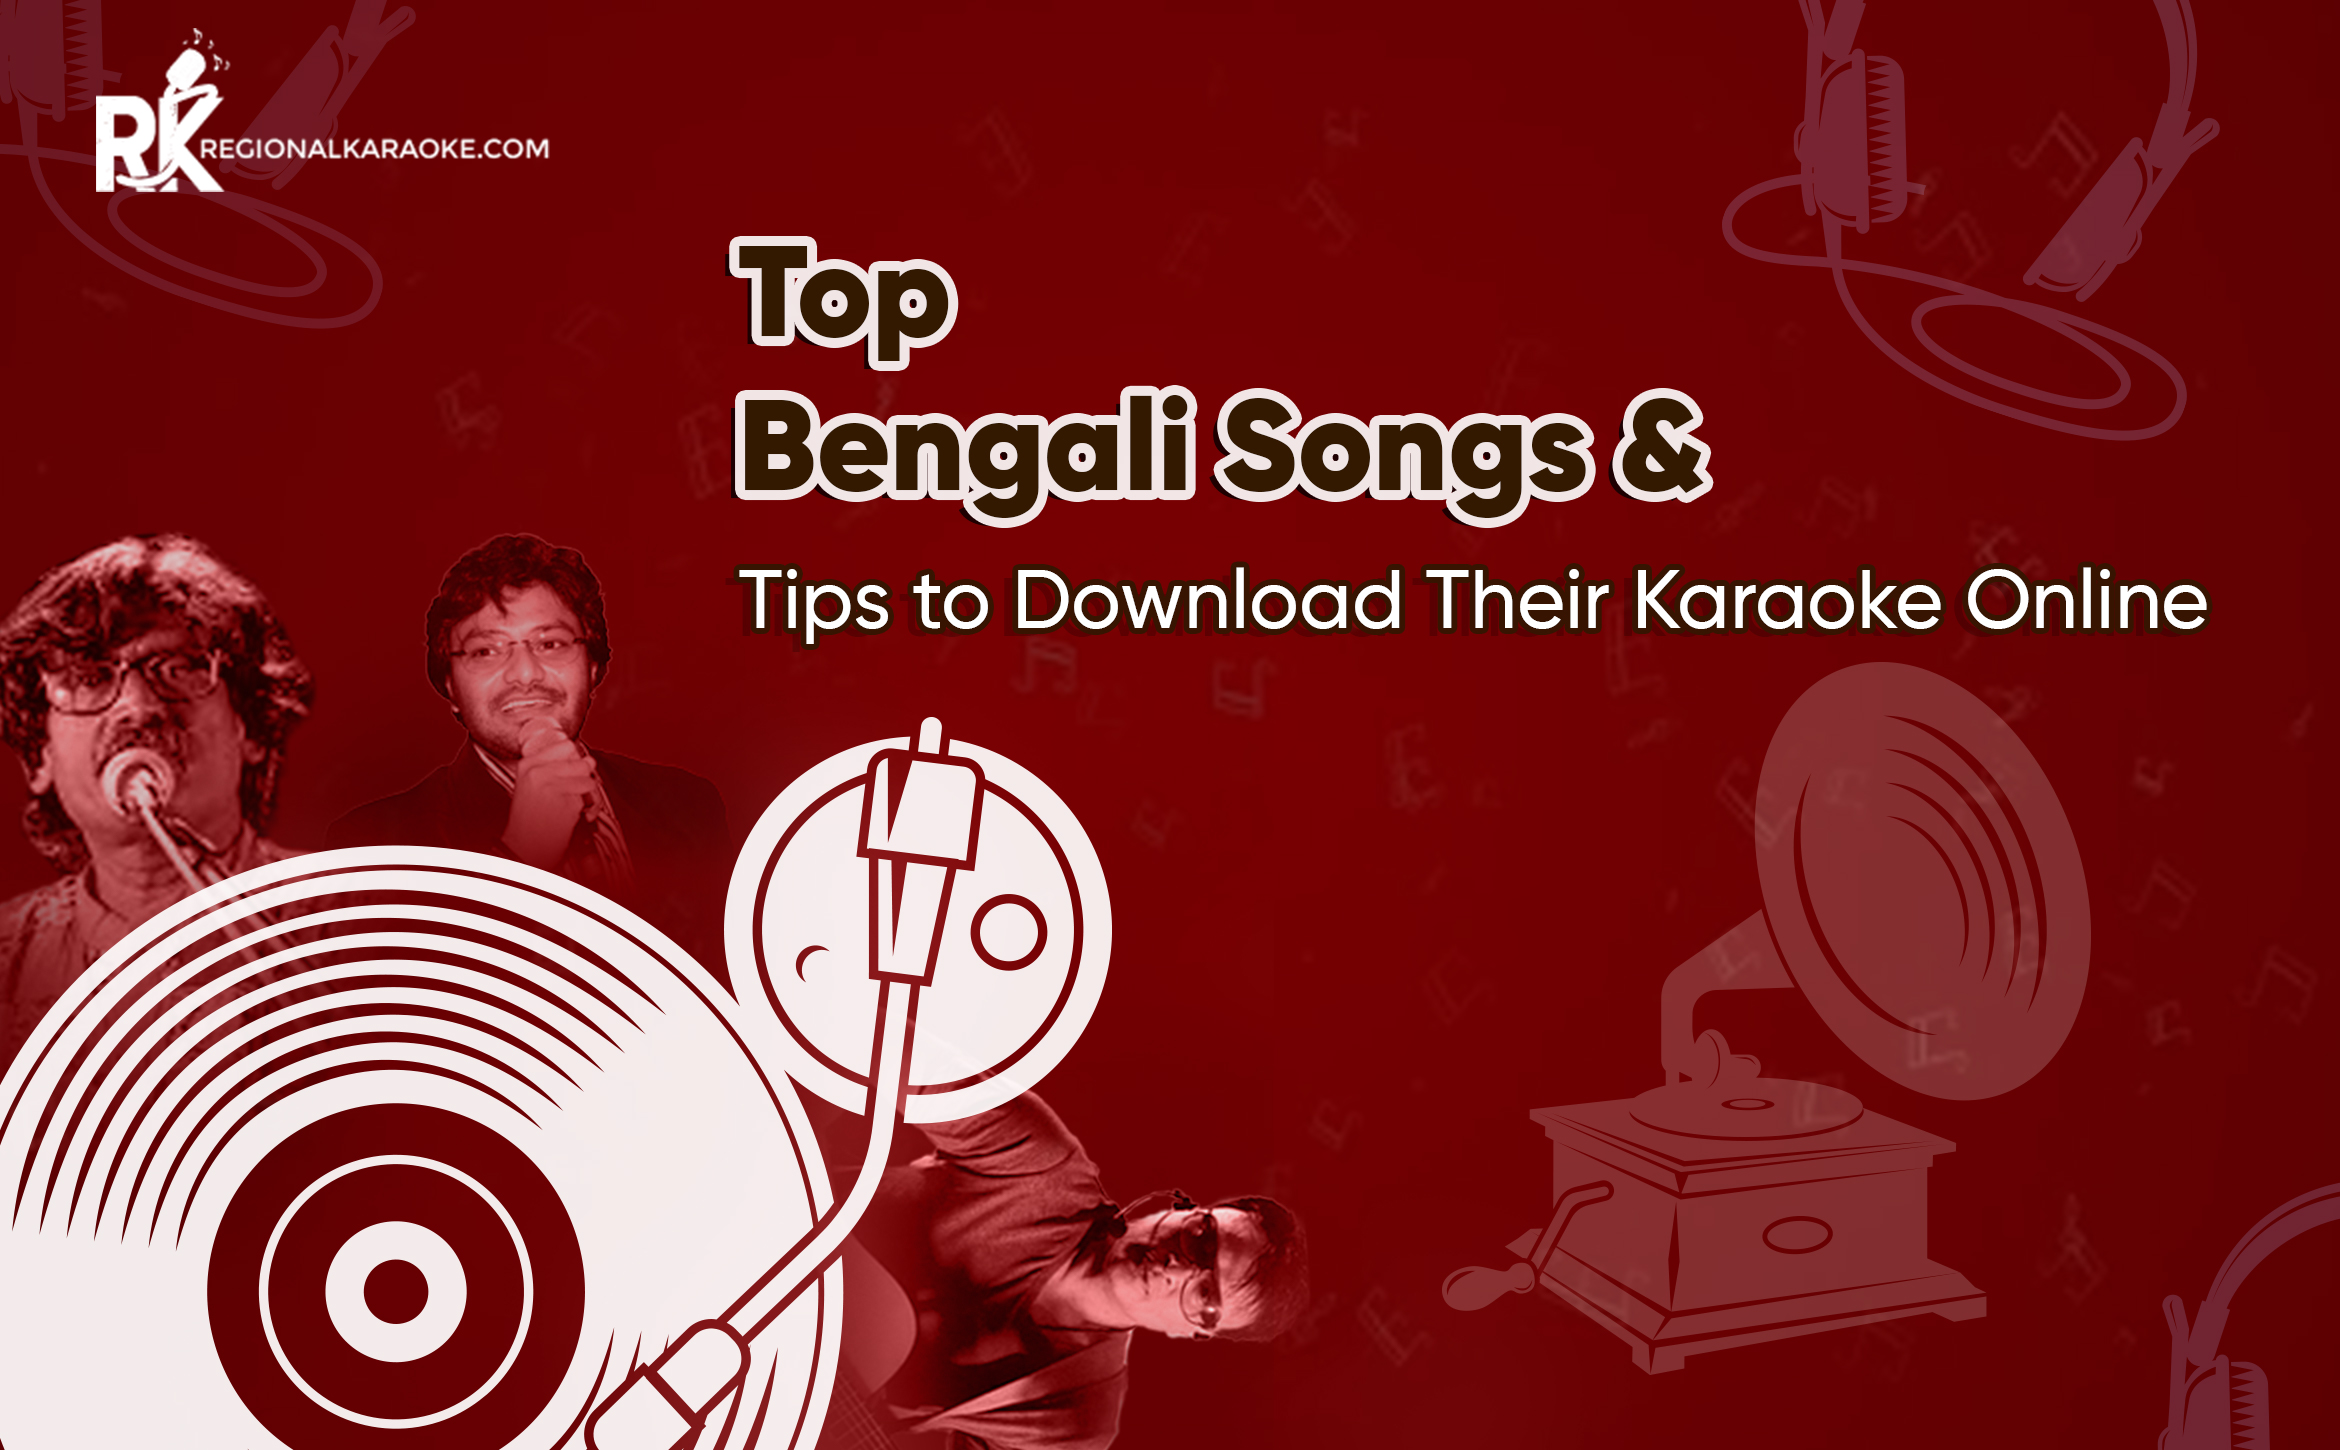 Top Bengali Songs & Tips To Download Their Karaoke Online